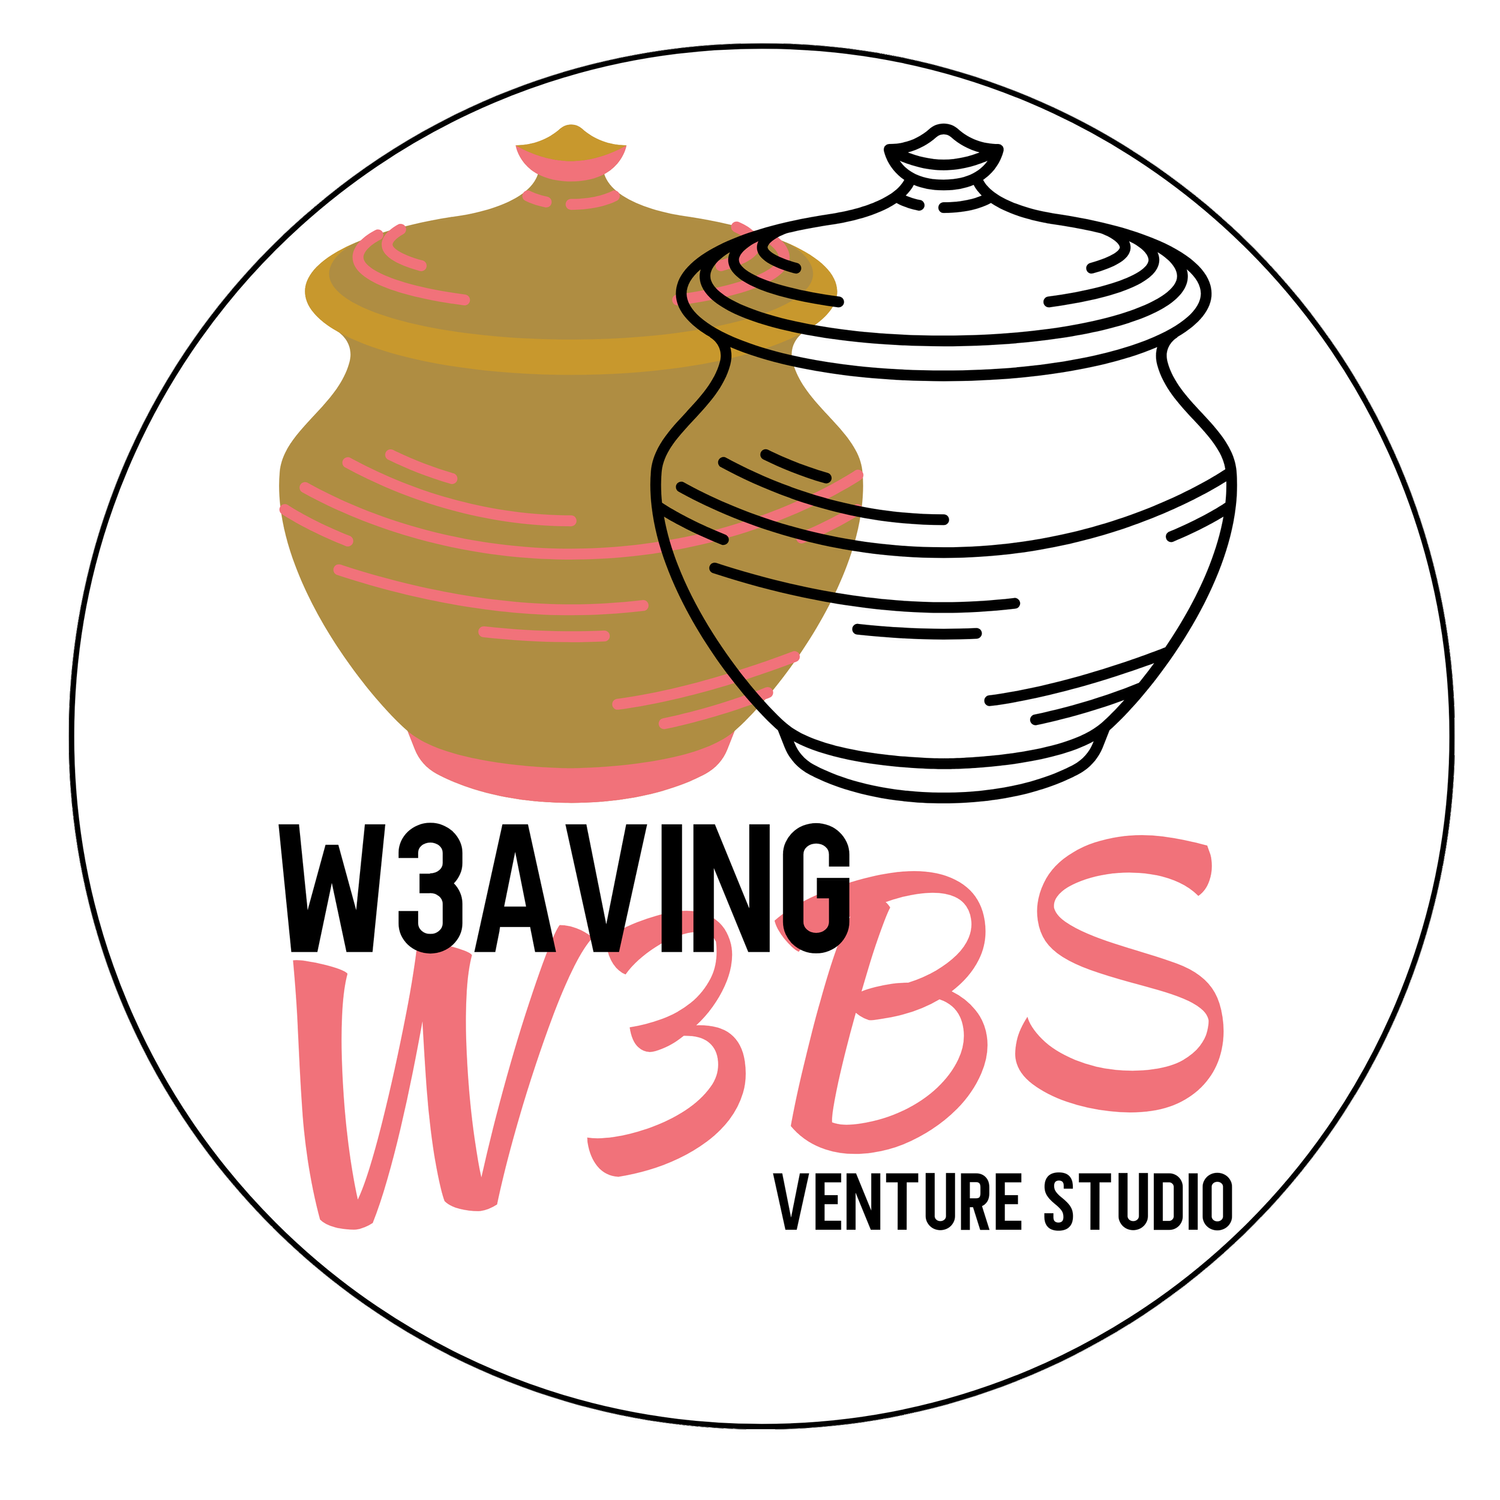 W3AVING W3BS Venture Studio